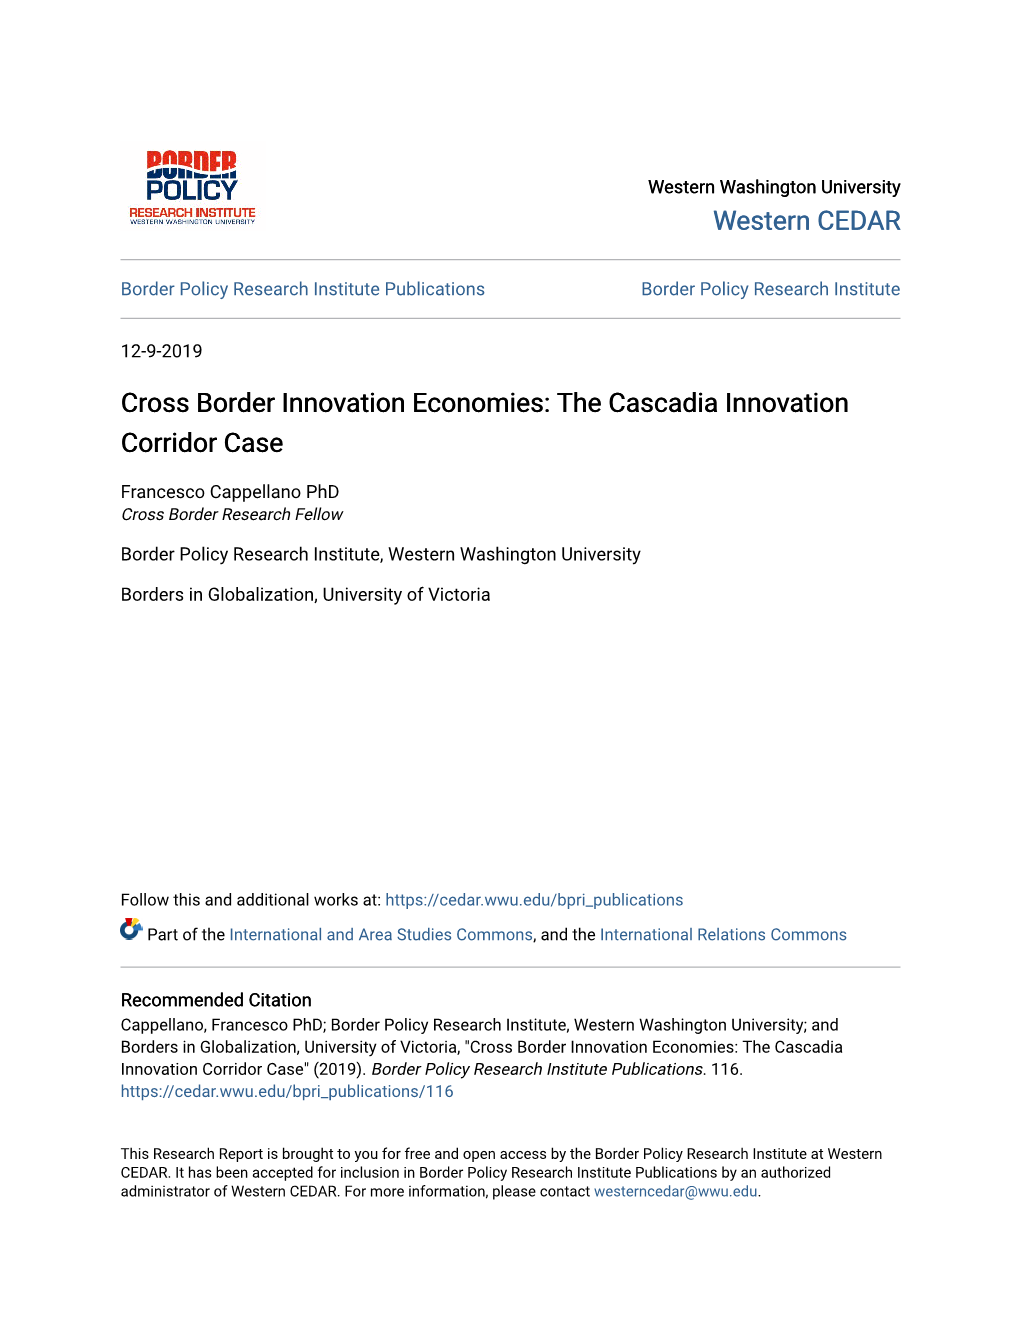 Cross Border Innovation Economies: the Cascadia Innovation Corridor Case